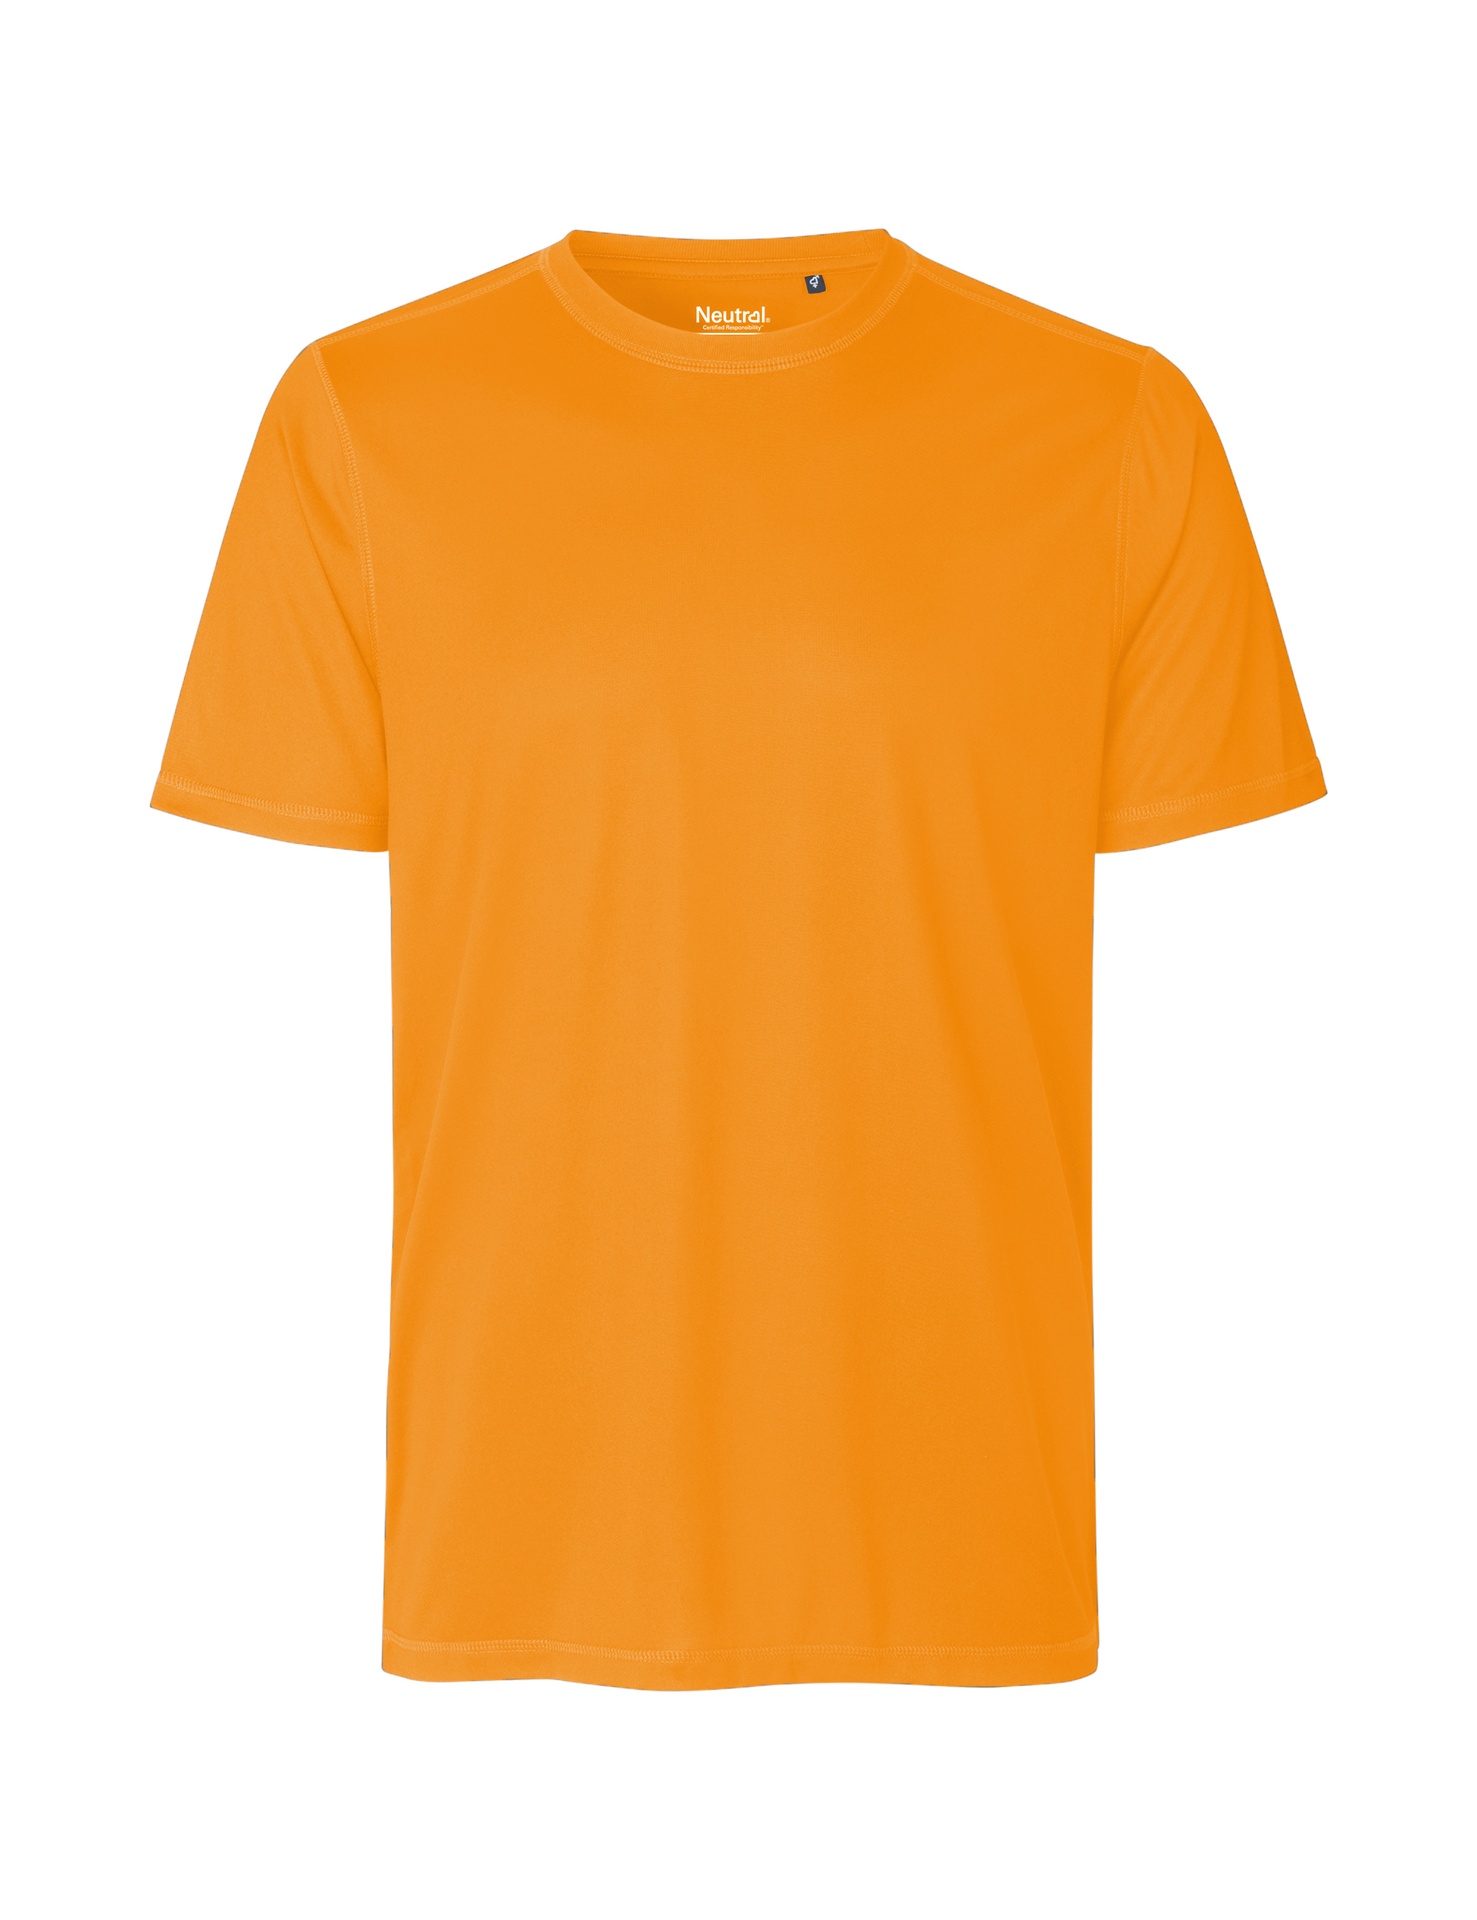 [PR/03790] Recycled Performance T-Shirt (Okay Orange 31, S)